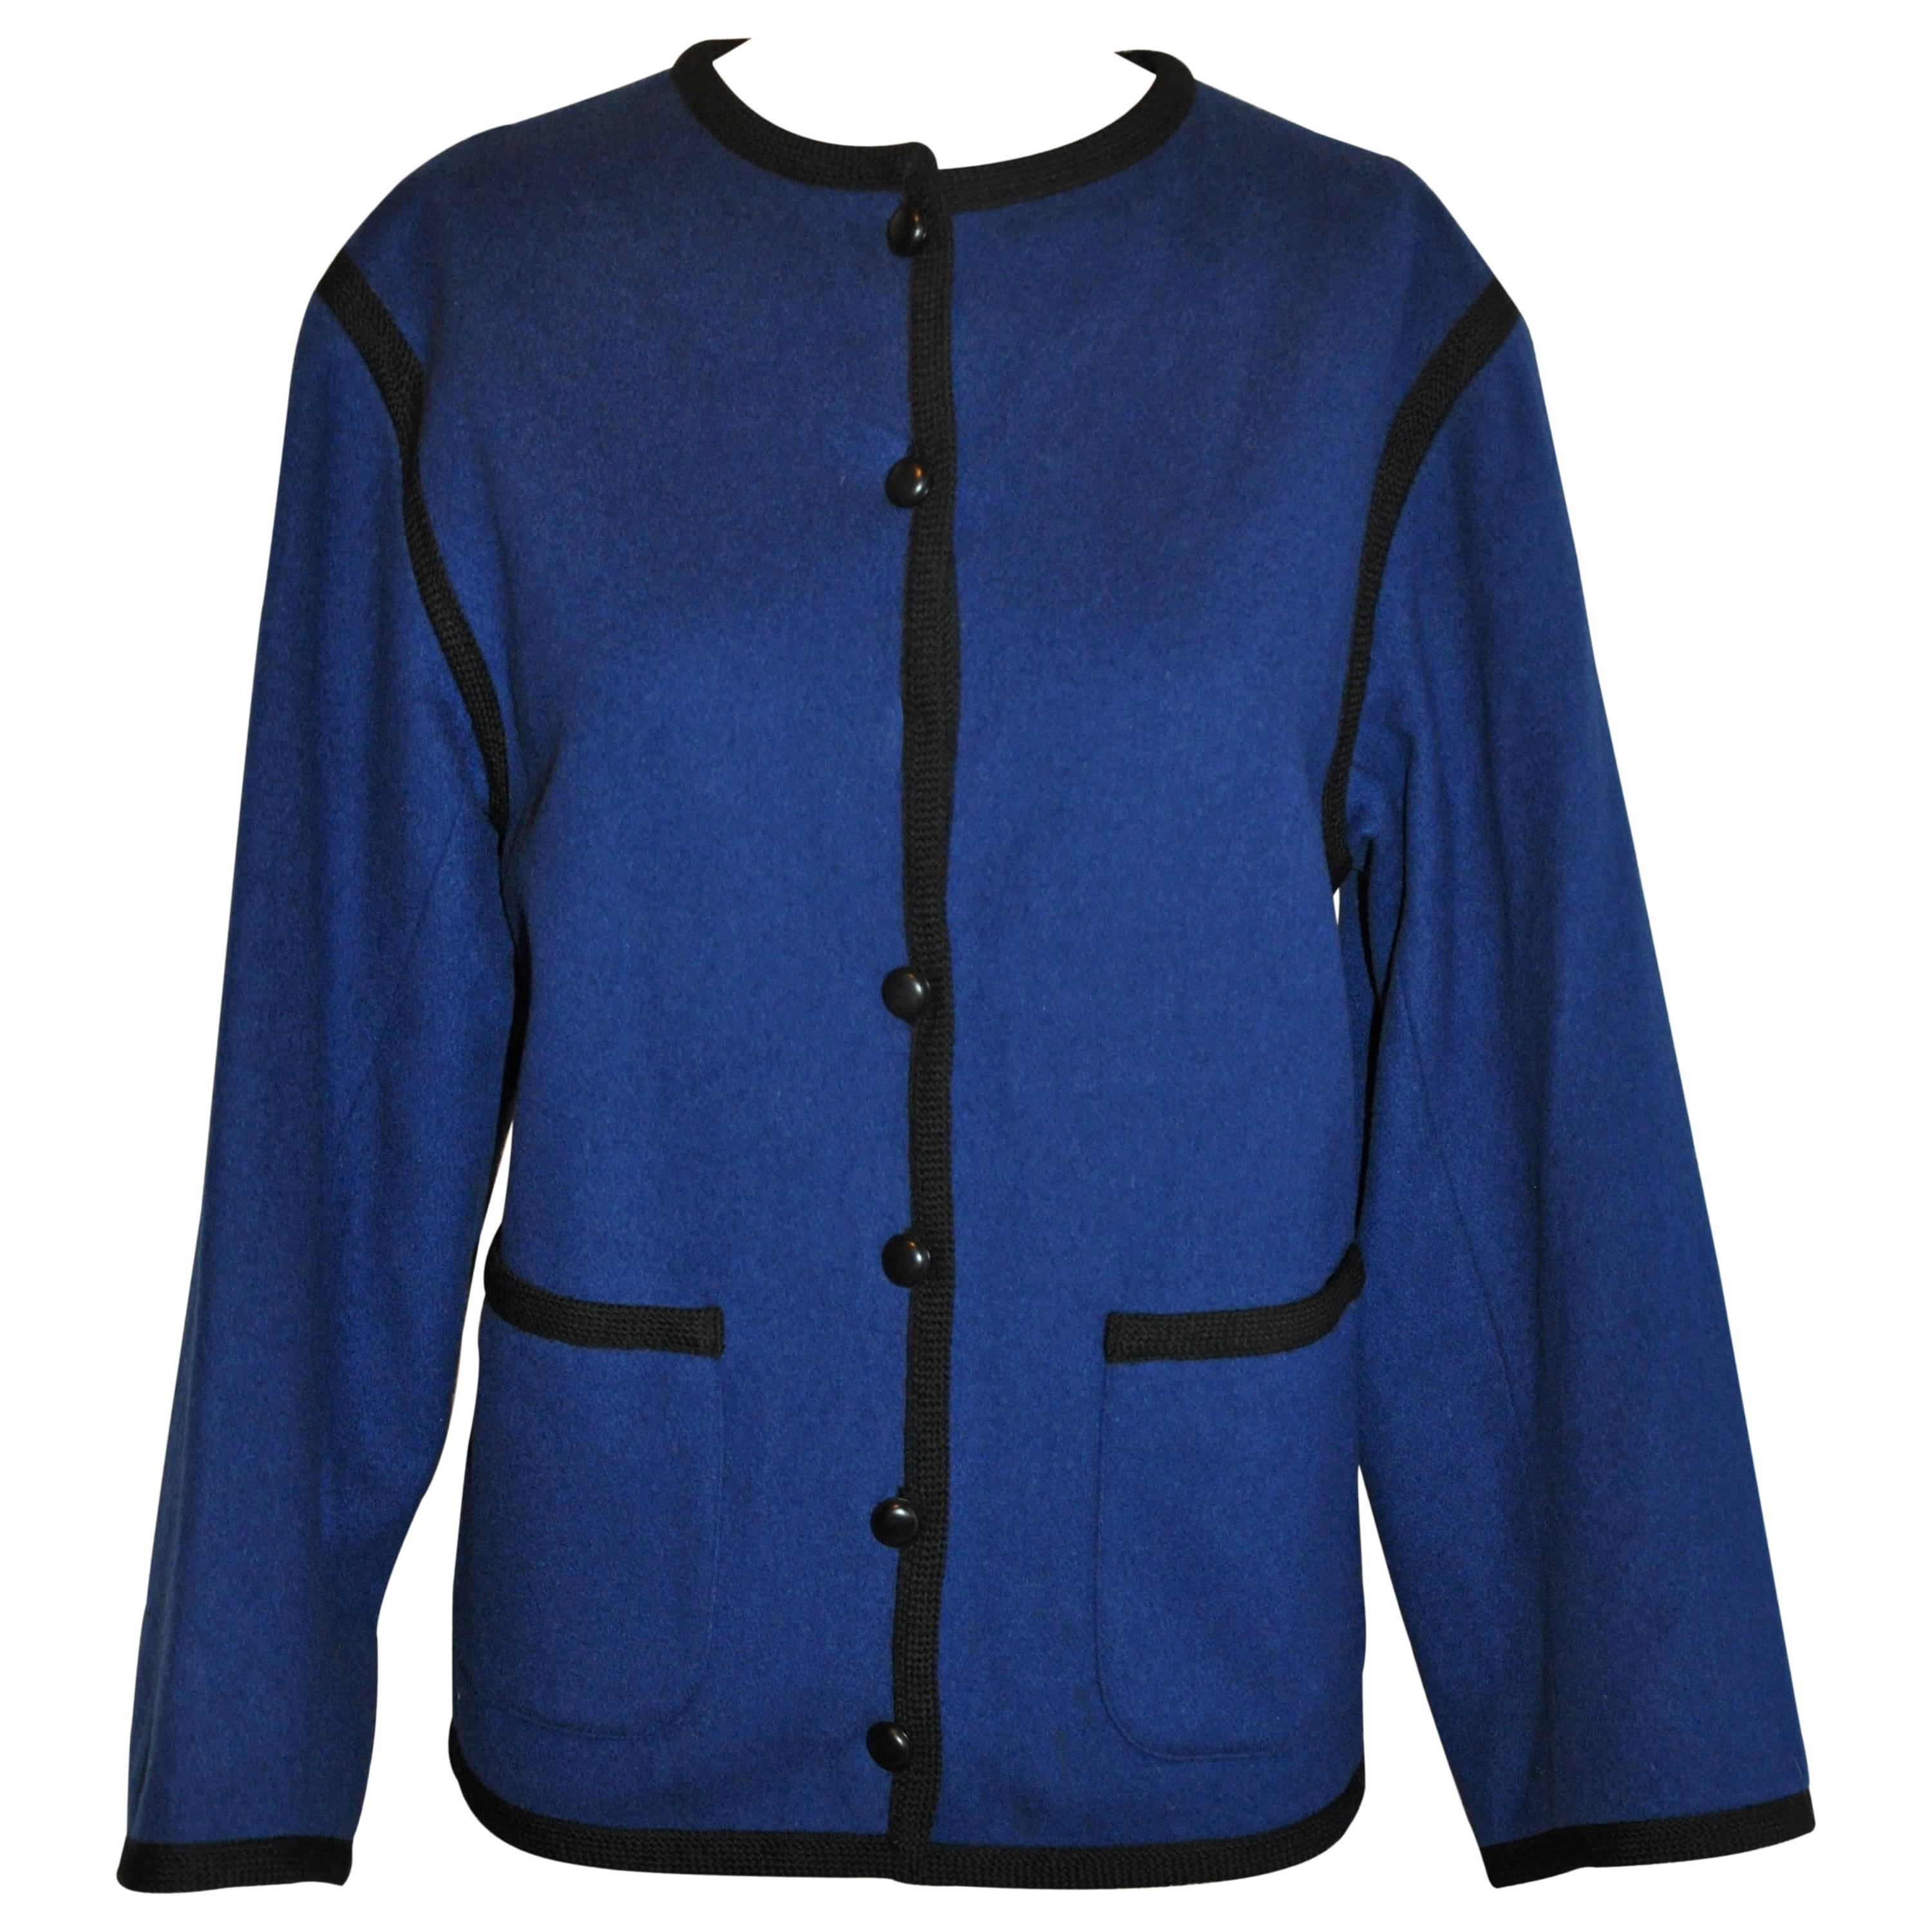 Yves Saint Laurent Iconic „Russian Collection“ gebürstete Jacke in Marineblau im Angebot